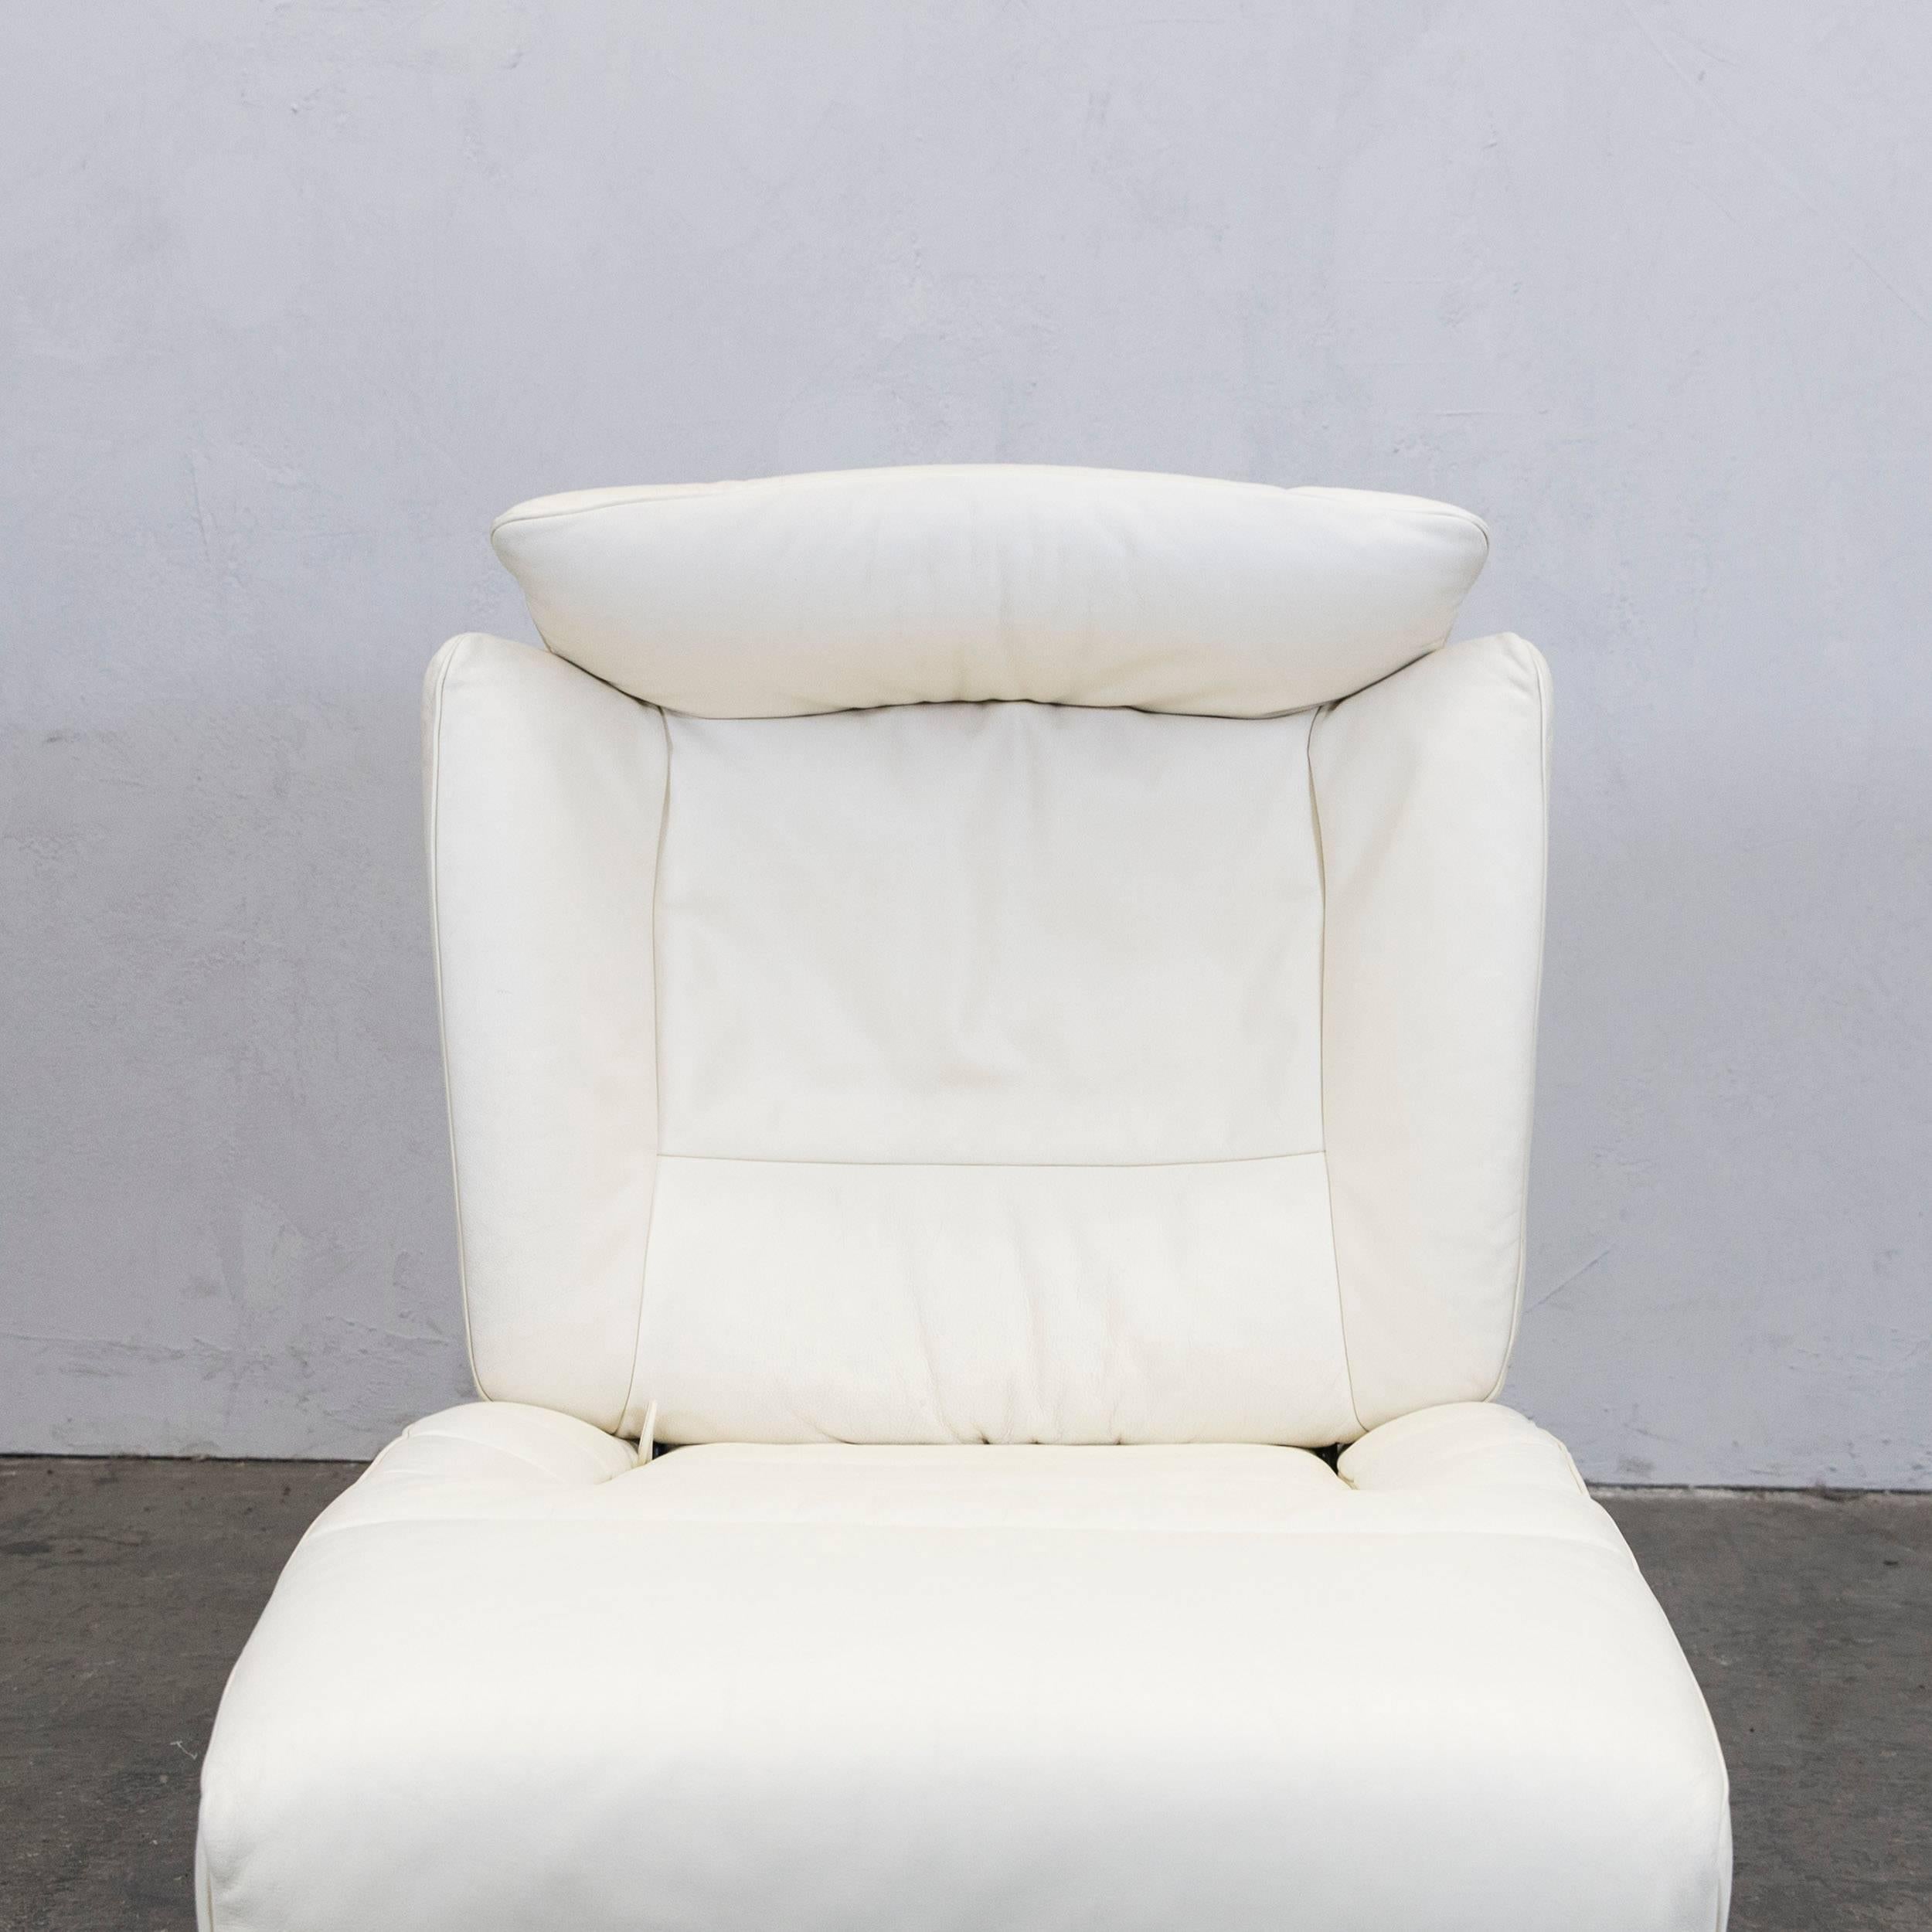 Contemporary De Sede DS 158 Design Leather Couch Recliner Chair Crème